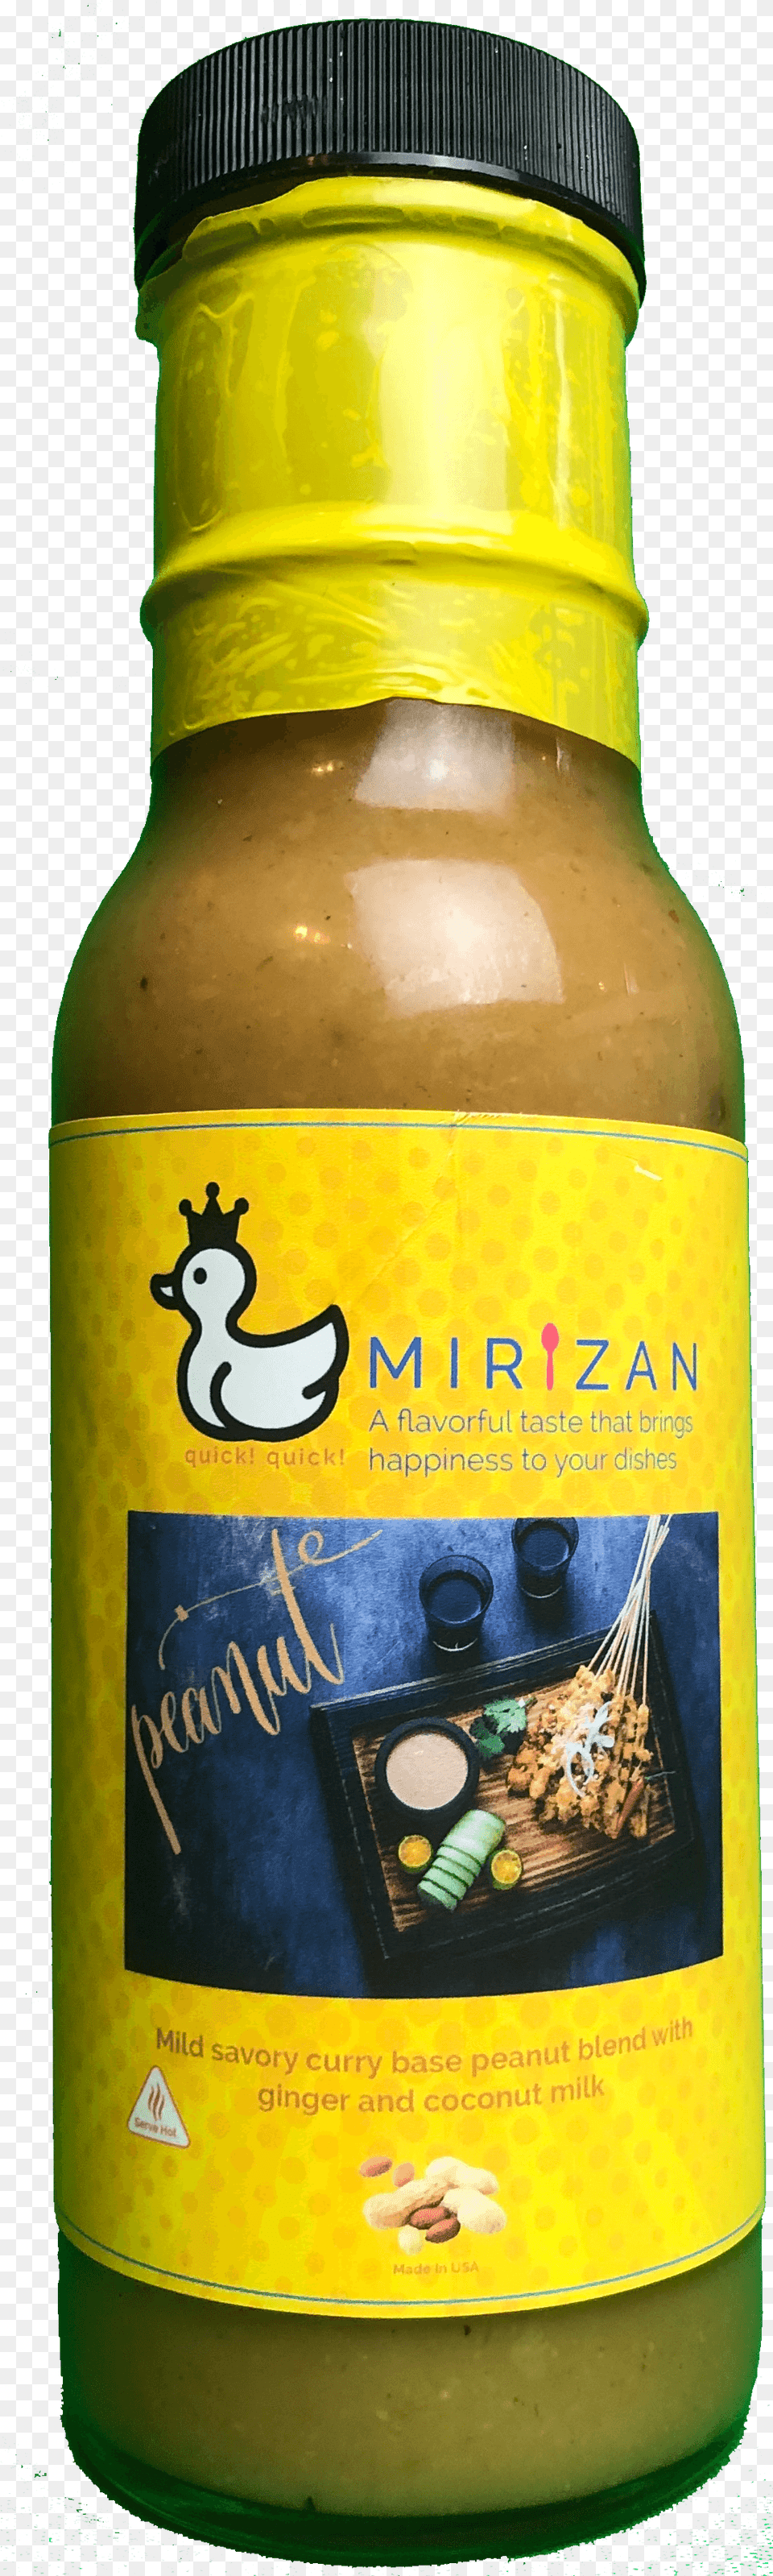 Mirizan Peanut Sauce Bottle, Shaker, Food, Mustard, Tape Free Transparent Png